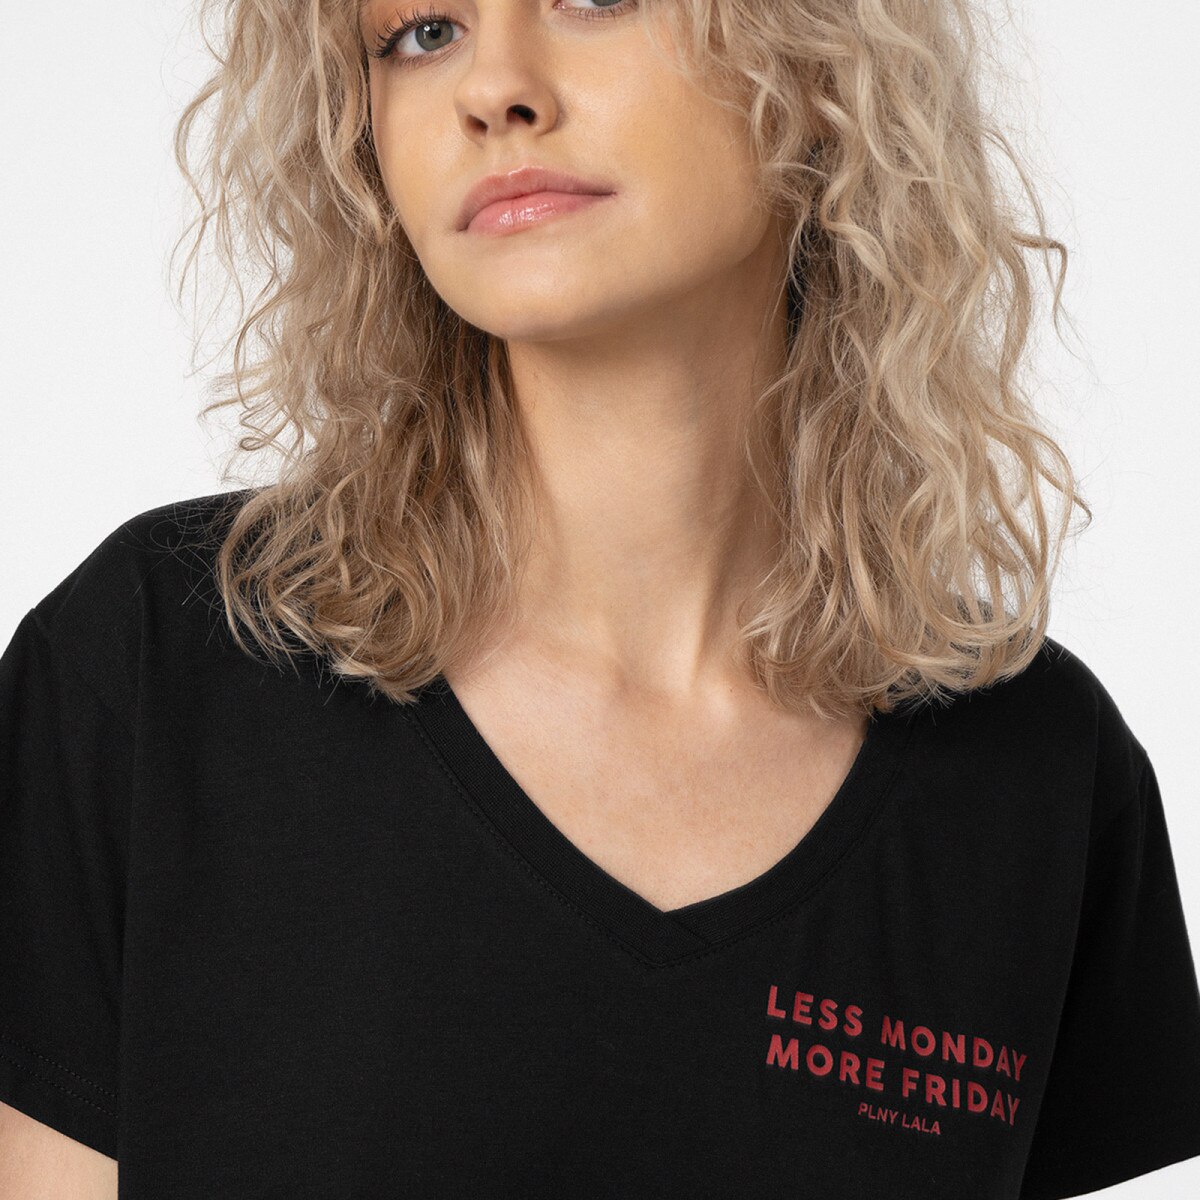 PLNY LALA Damski t-shirt z nadrukiem PLNY LALA Less Monday V-neck Black Tee Czarny 3